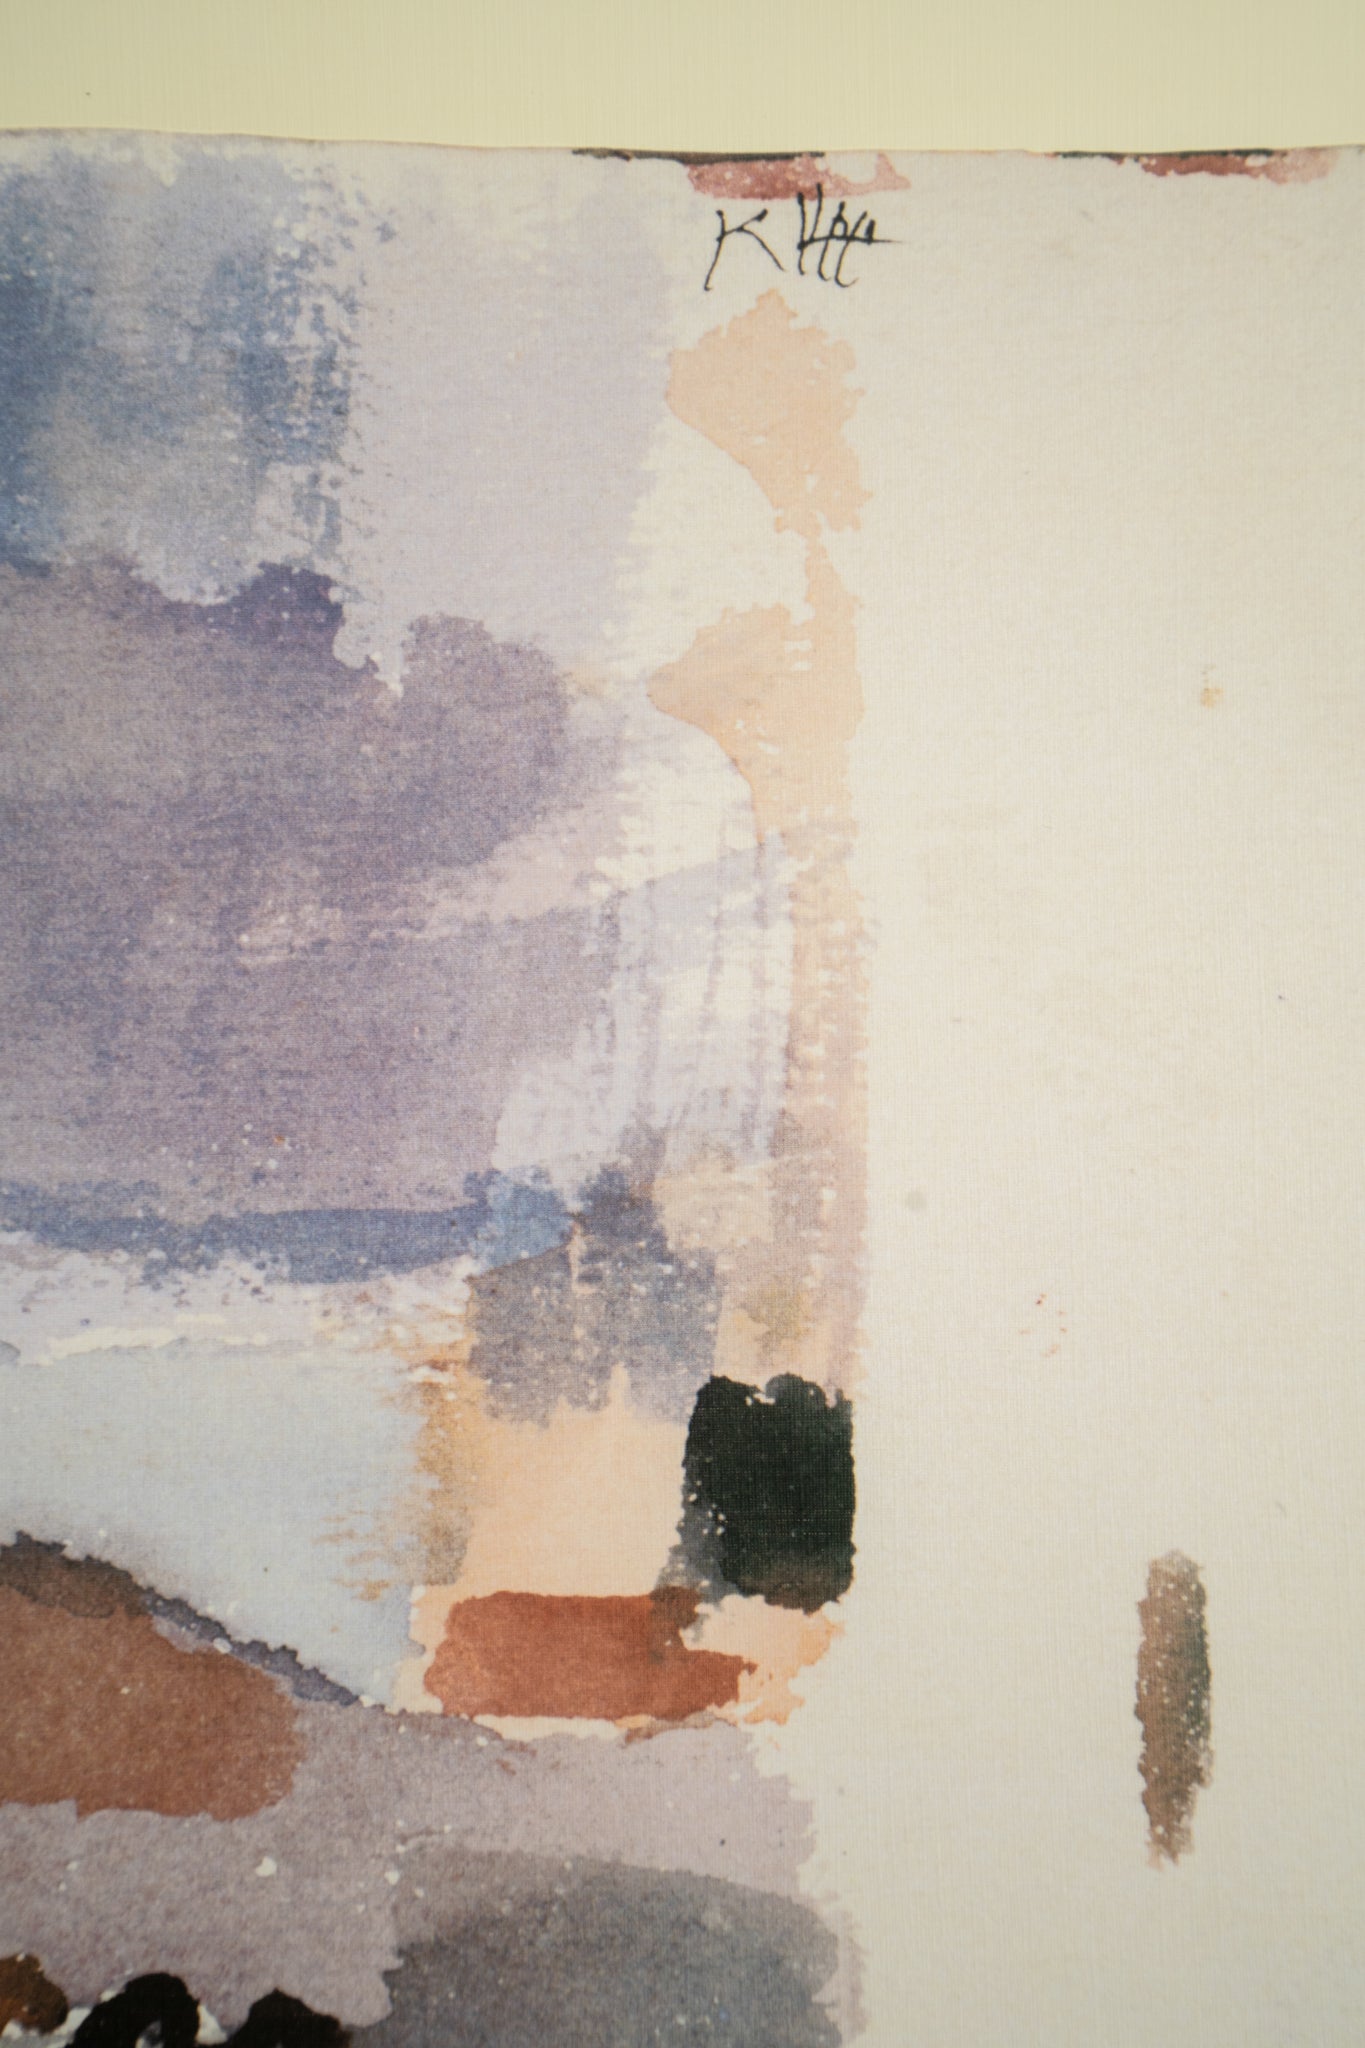 Paul Klee 'Before the Gates of Kairouan' (1914)